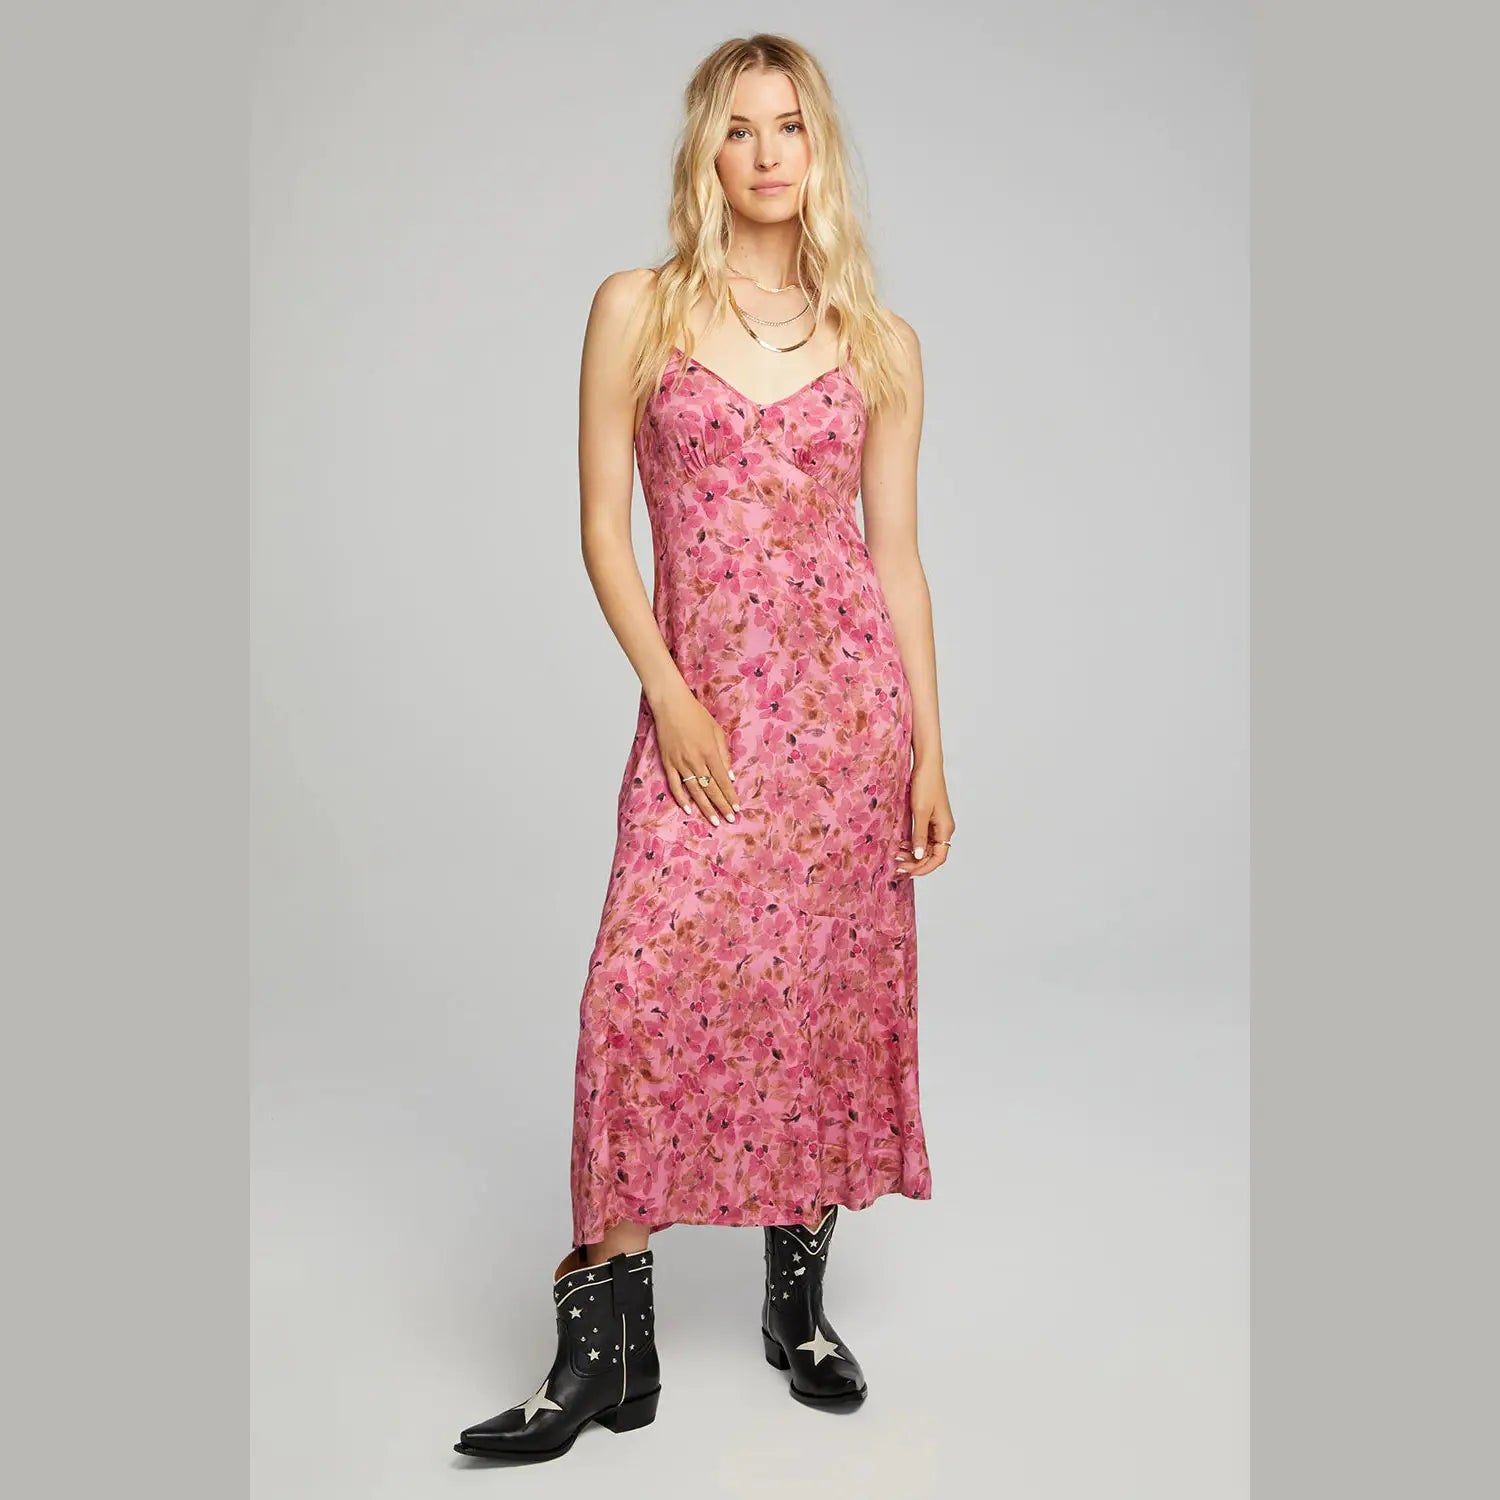 Saltwater Luxe SHARICE Hot Pink Midi Tank Dress - Jaunts Boutique 